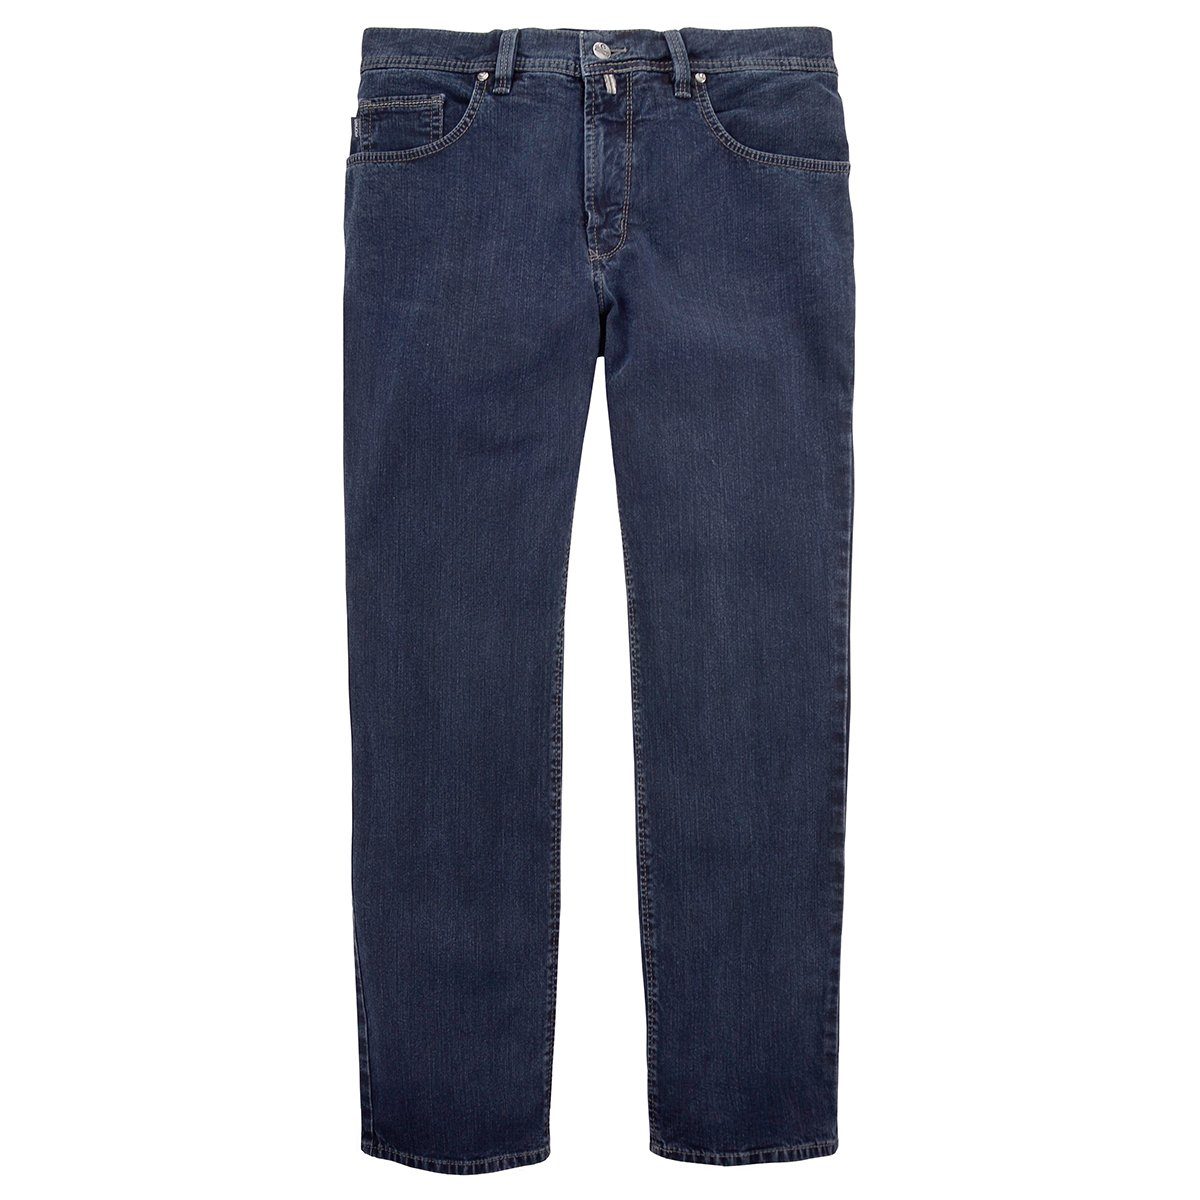 Pionier Bequeme Jeans Übergrößen XXL Pionier Jeans-Hose blueblack Peter